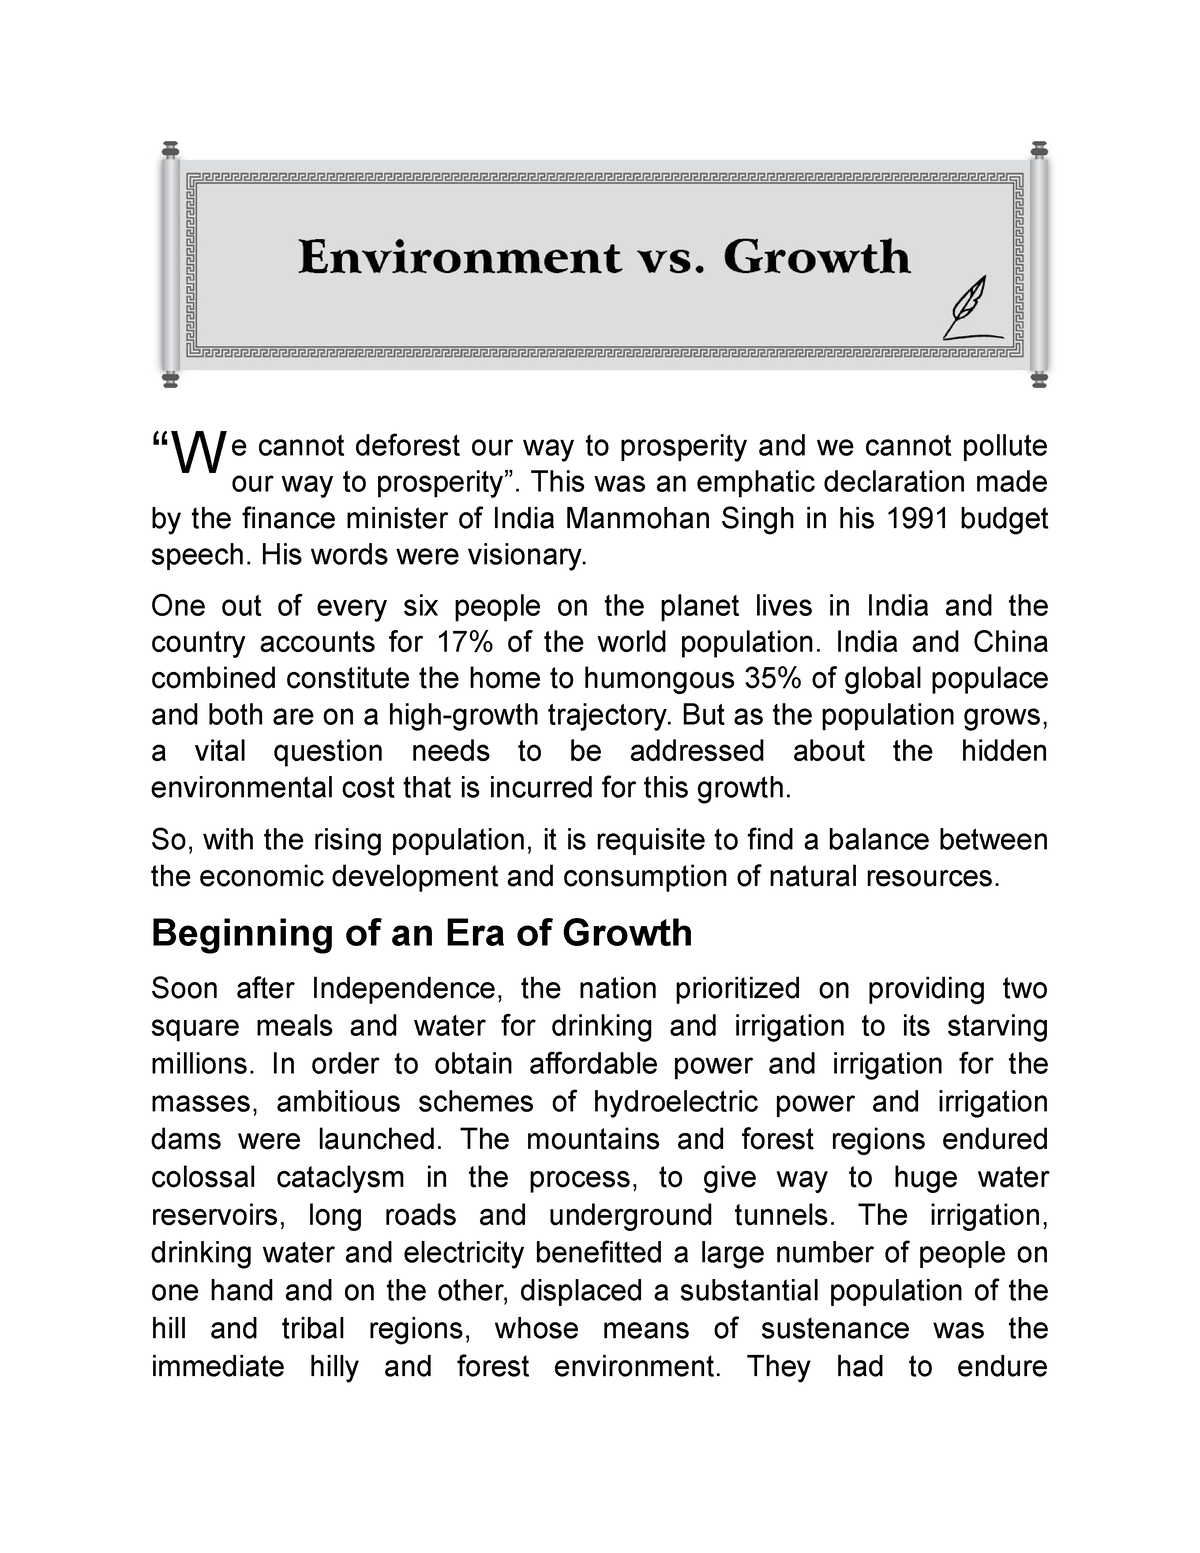 essay on environment vs growth